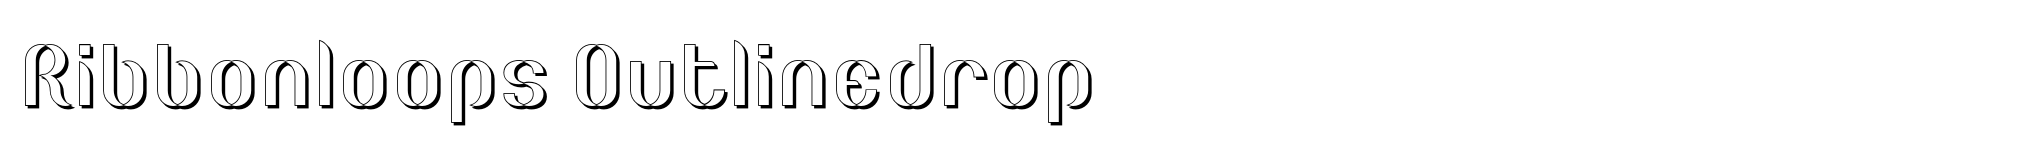 Ribbonloops Outlinedrop image